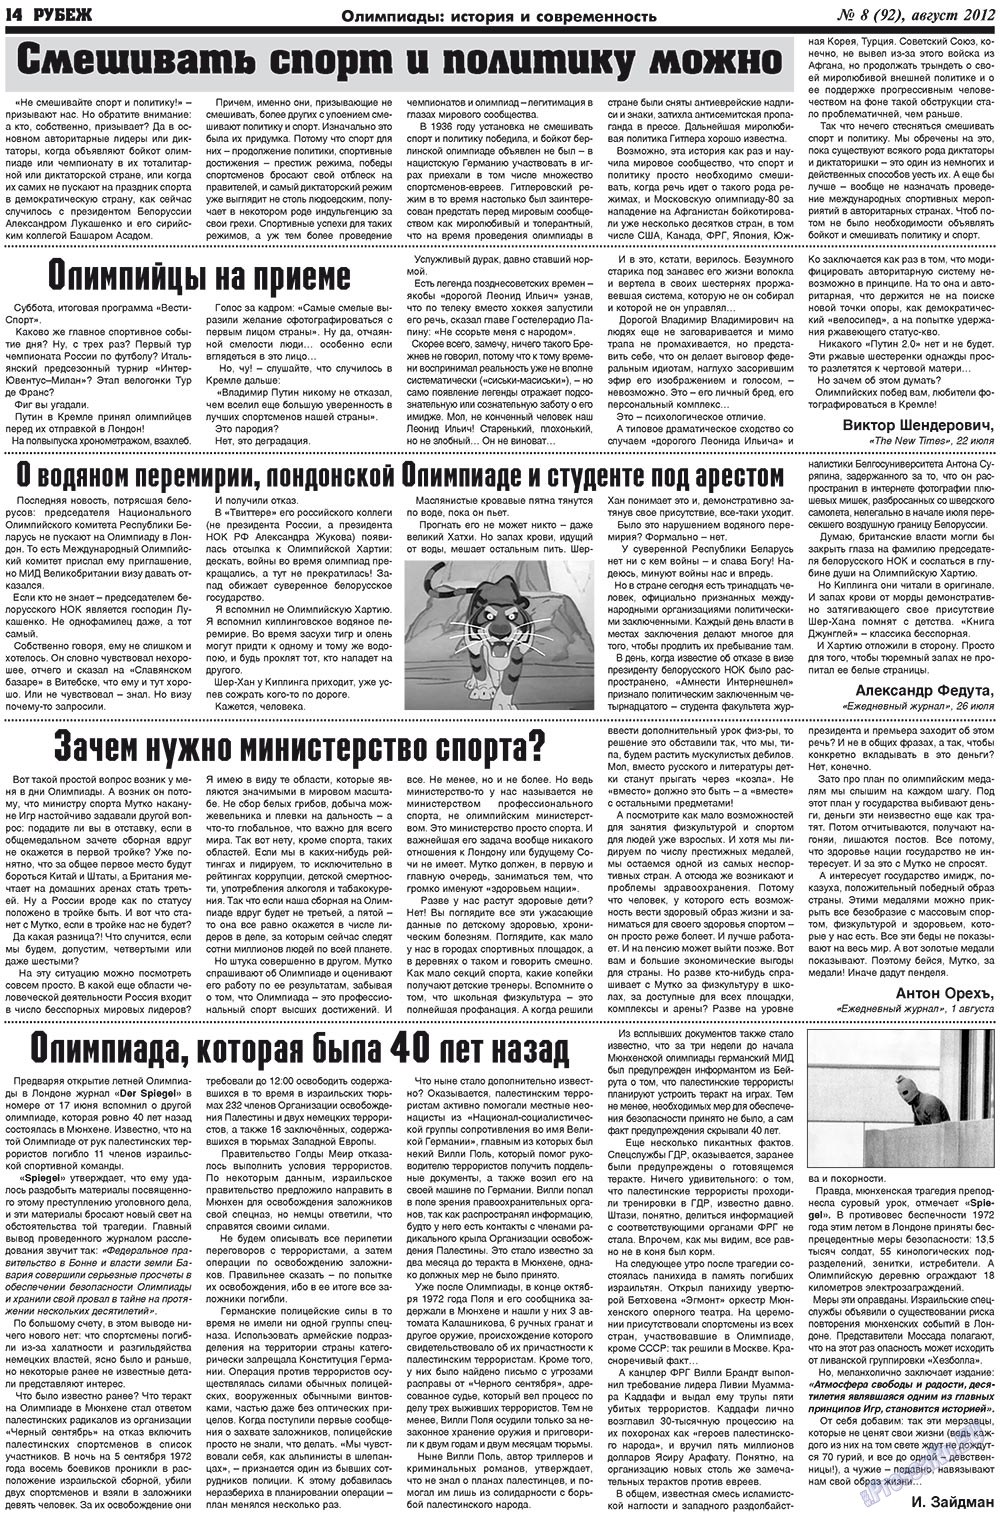 Рубеж, газета. 2012 №8 стр.14